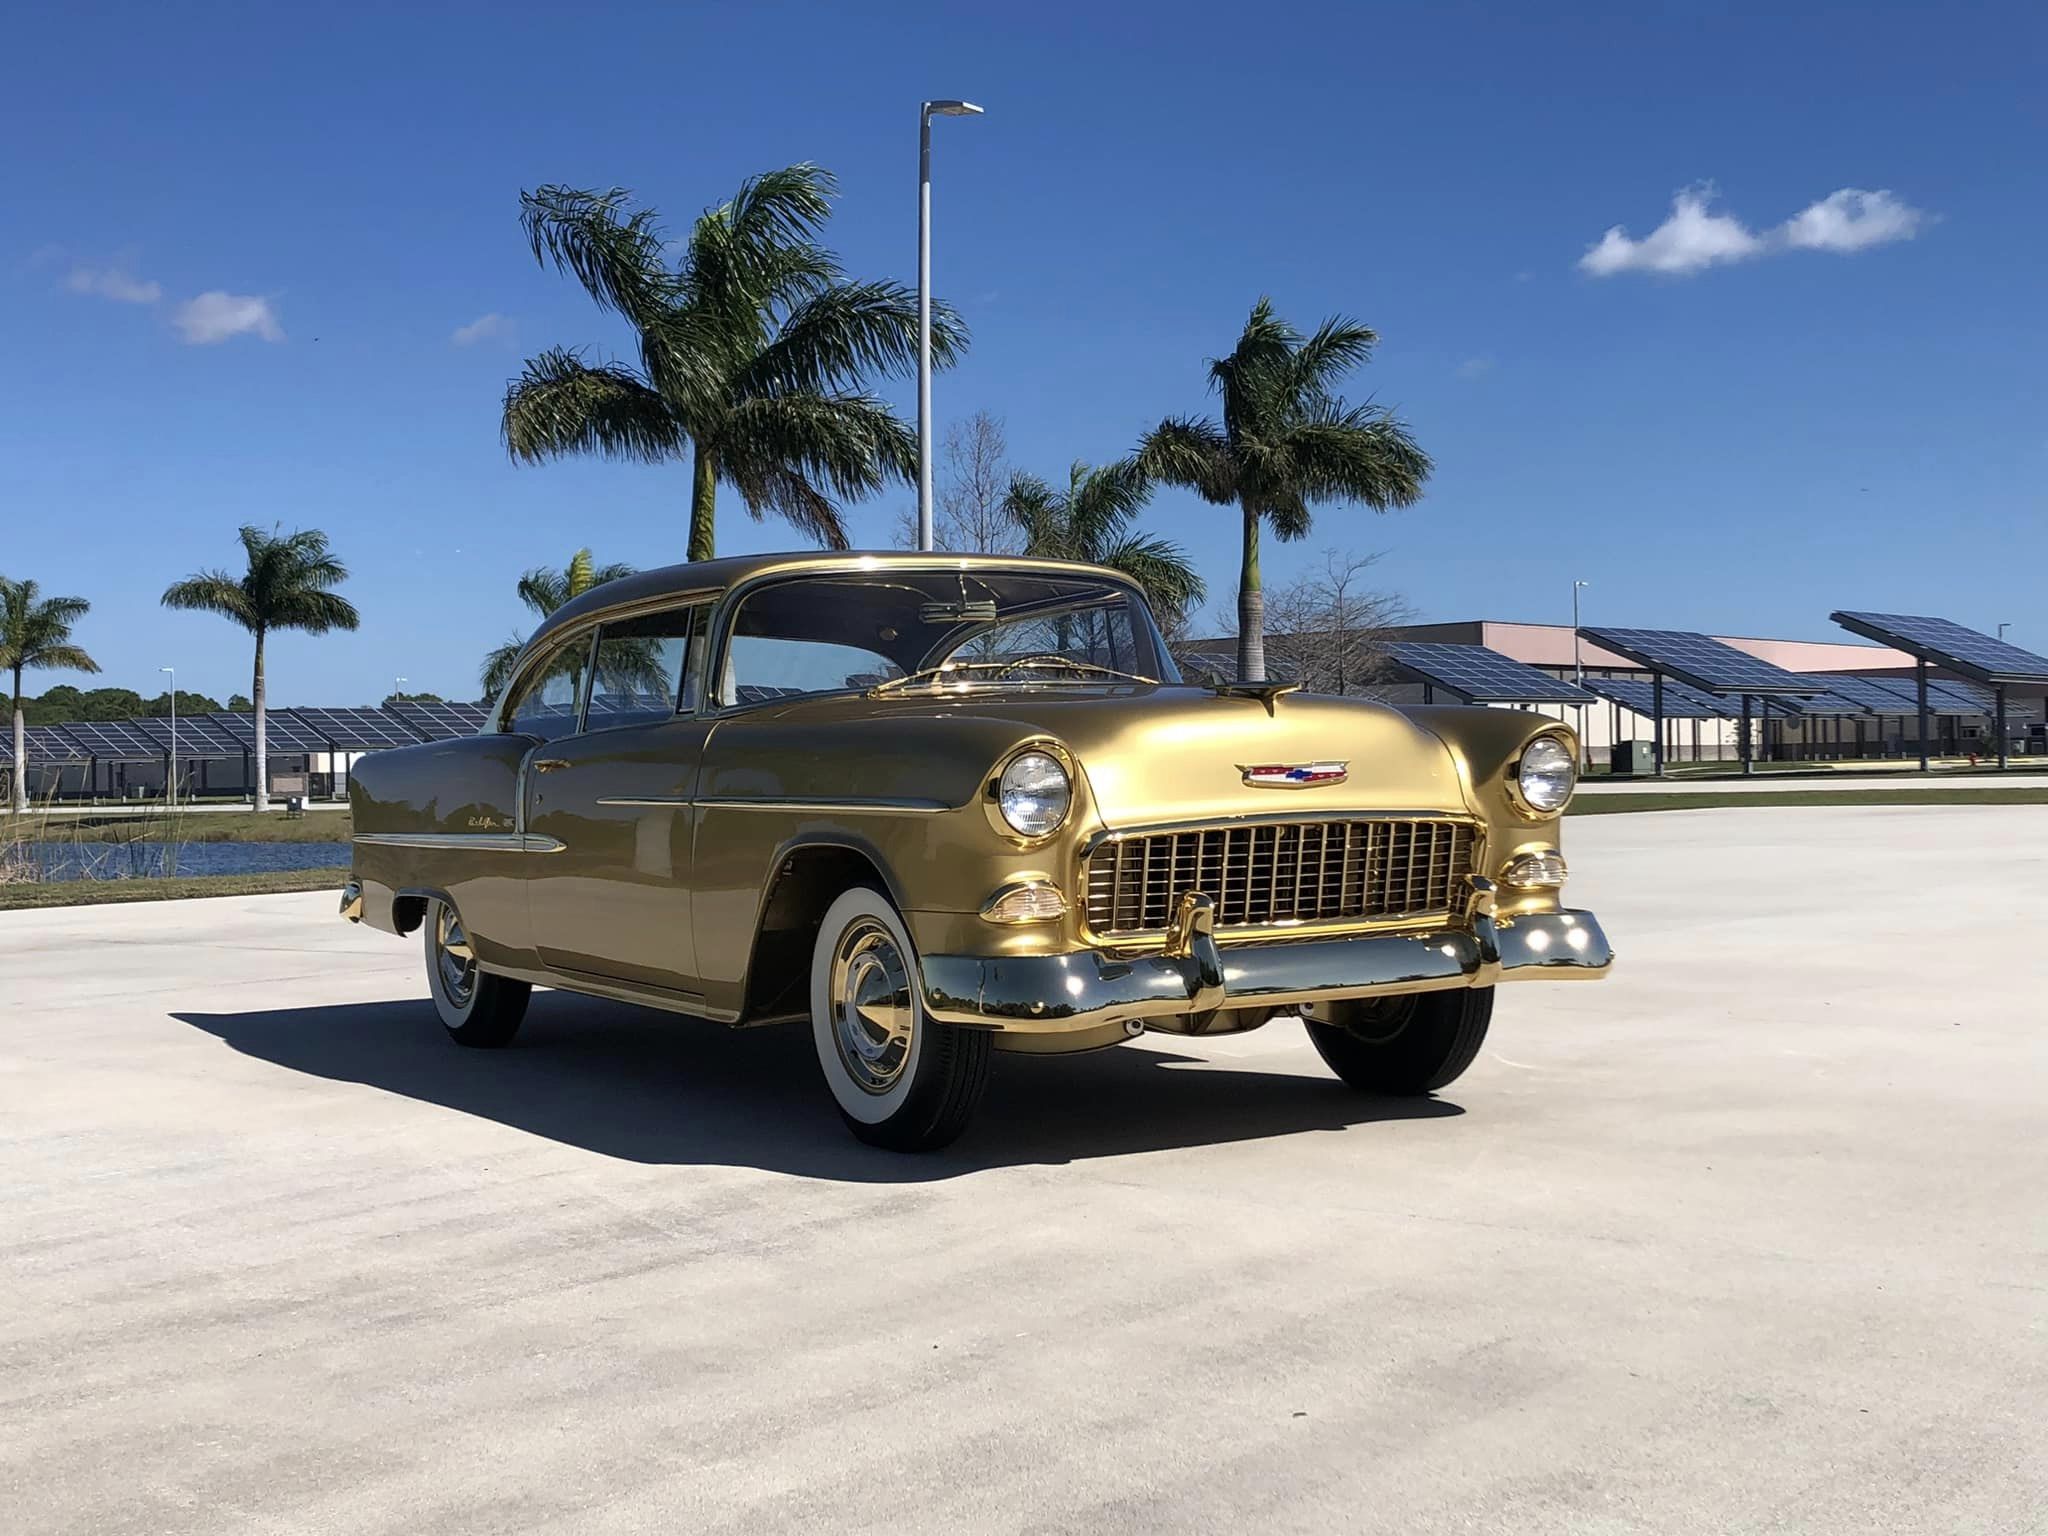 Chevrolet's Golden Milestone: The Lost Bel Air Resurrected